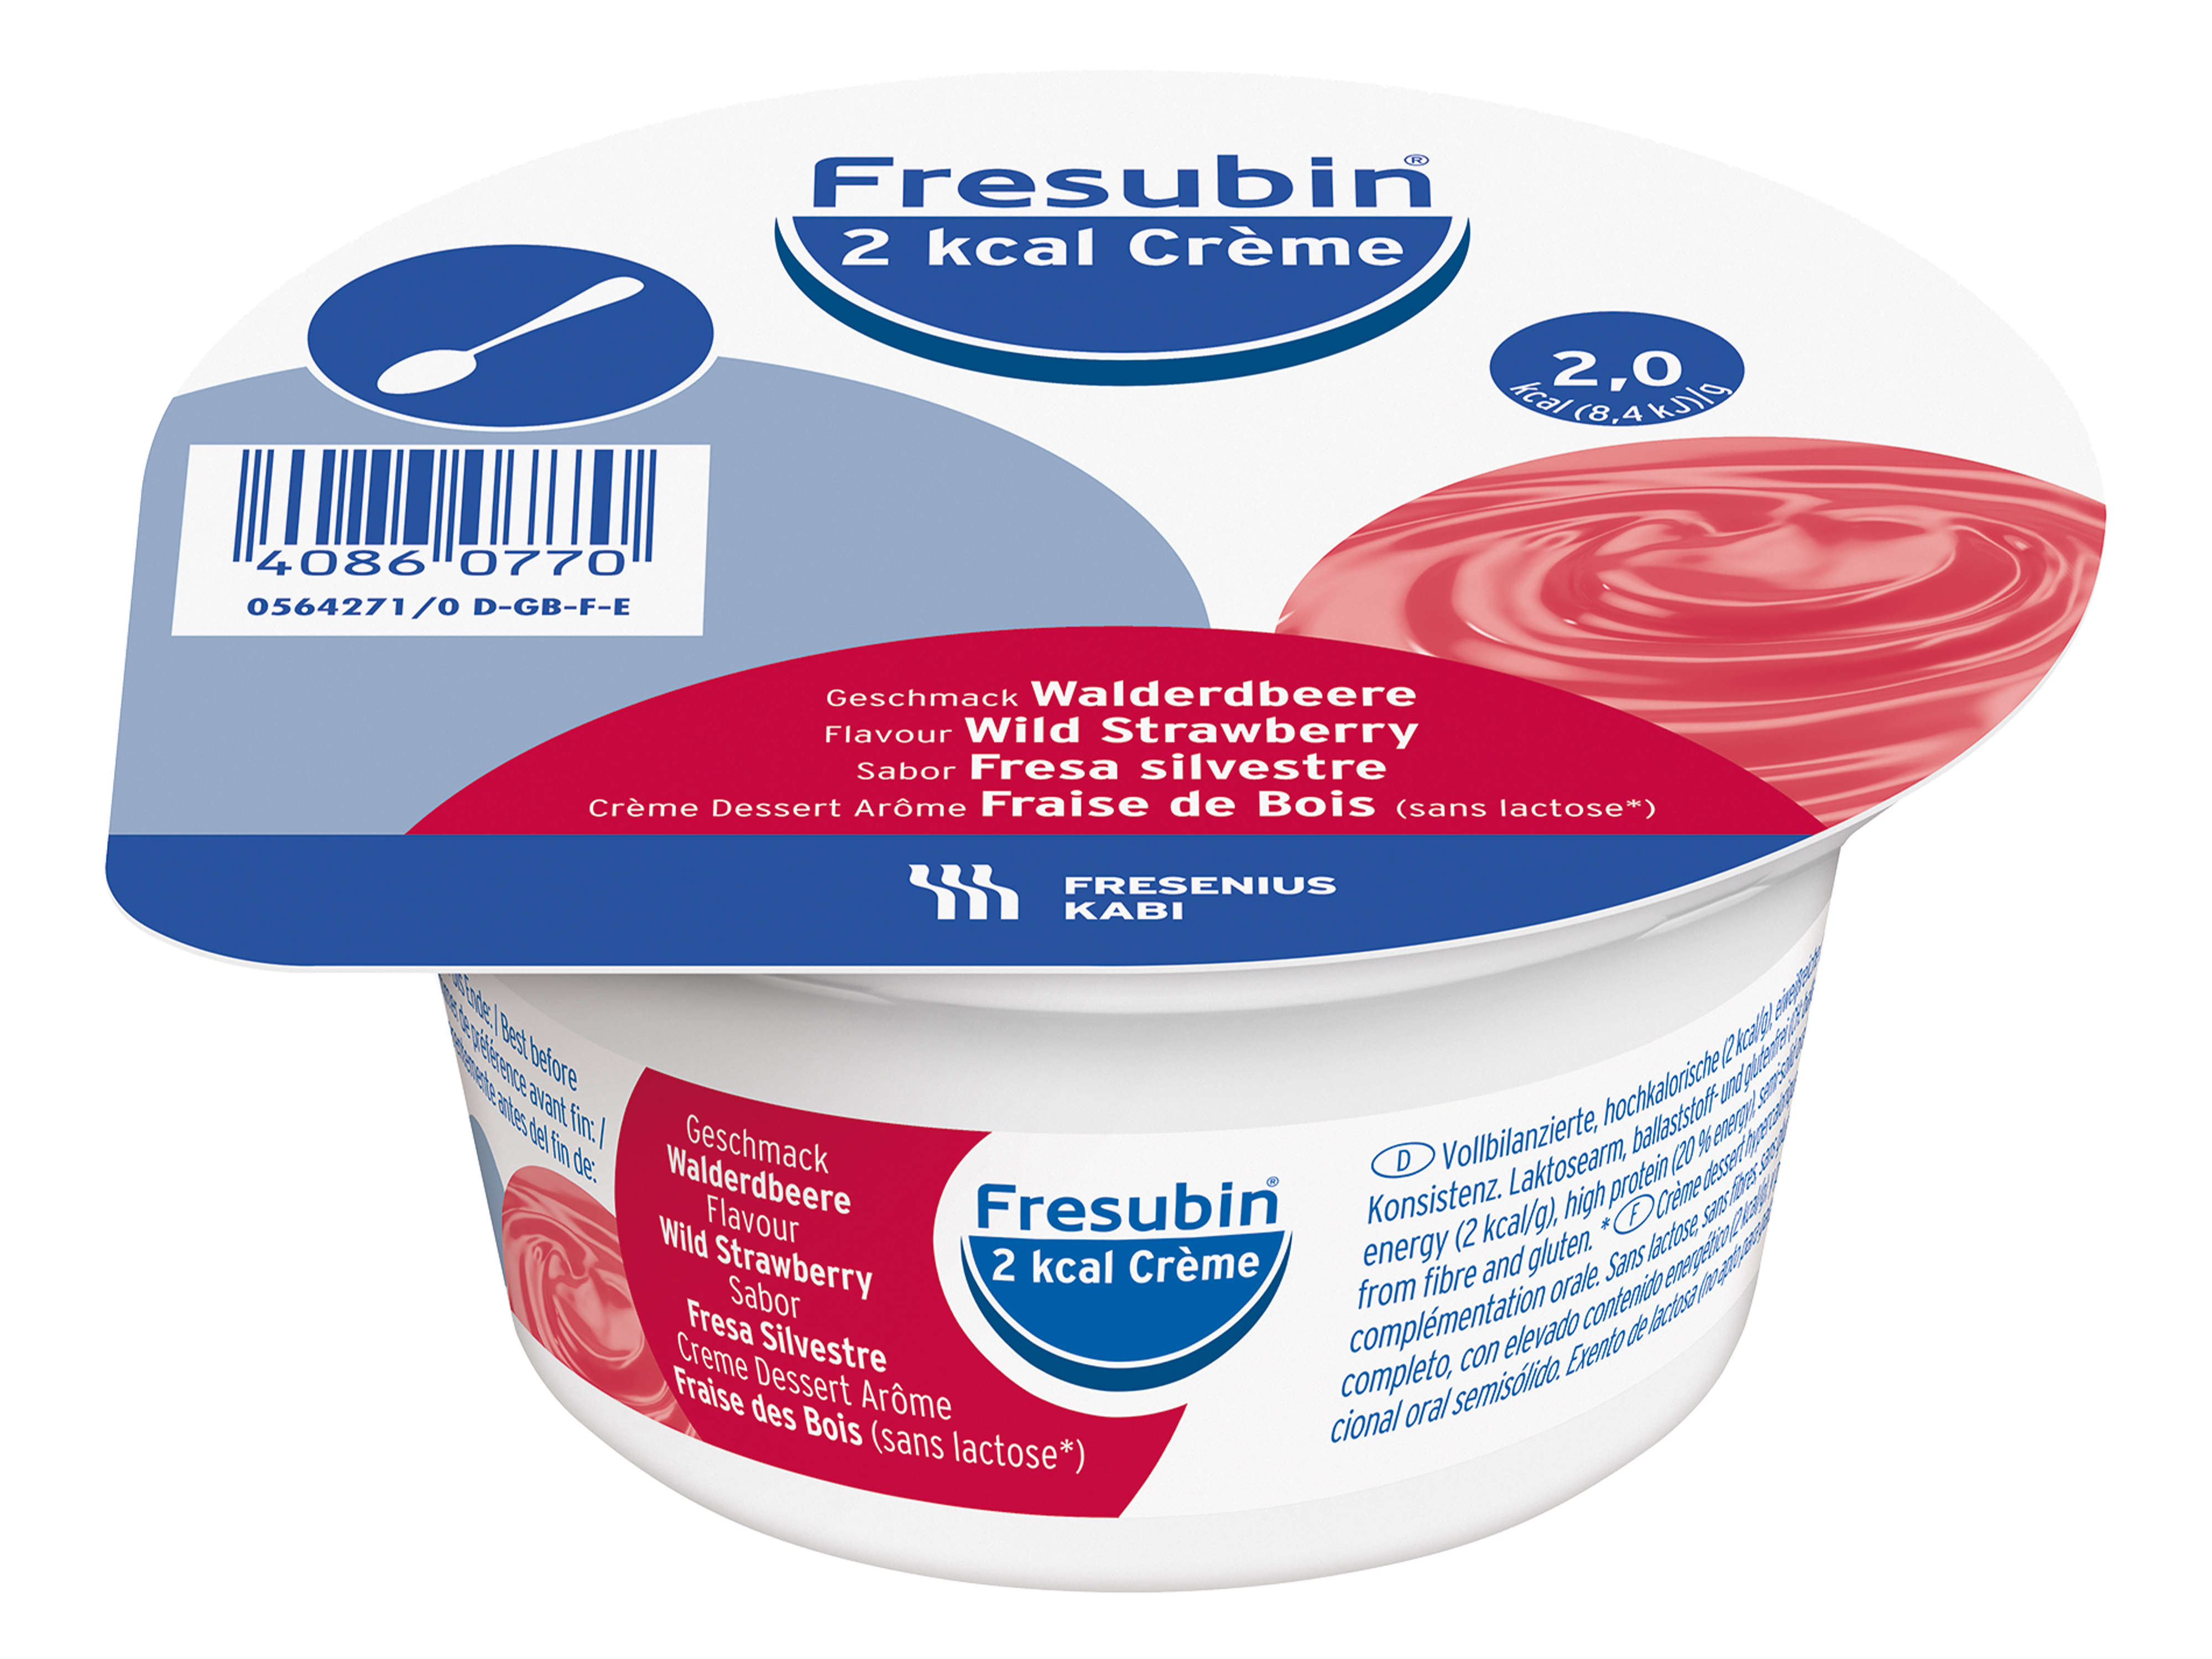 Fresubin 2kcal Crème markjordbær, 4x125 ml